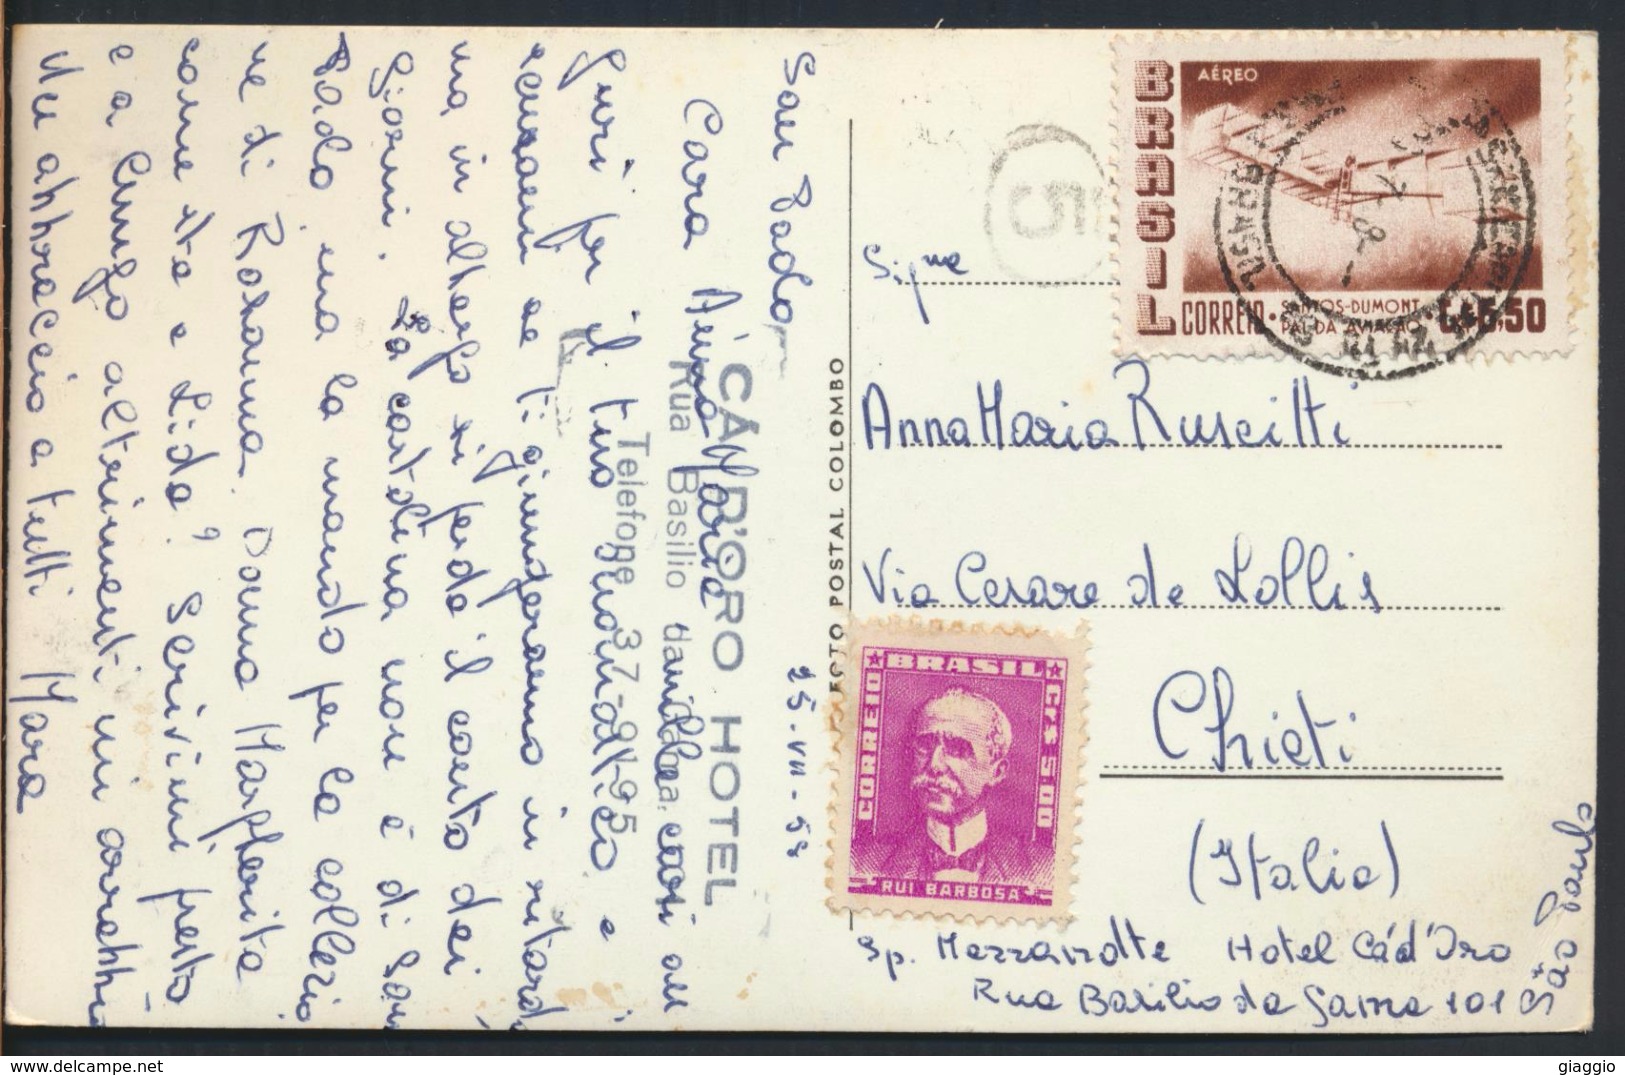 °°° 4395 - BRASIL - BELO HORIZONTE - TRECHO DA AV. AFONSO PENA - 1958 With Stamps °°° - Belo Horizonte